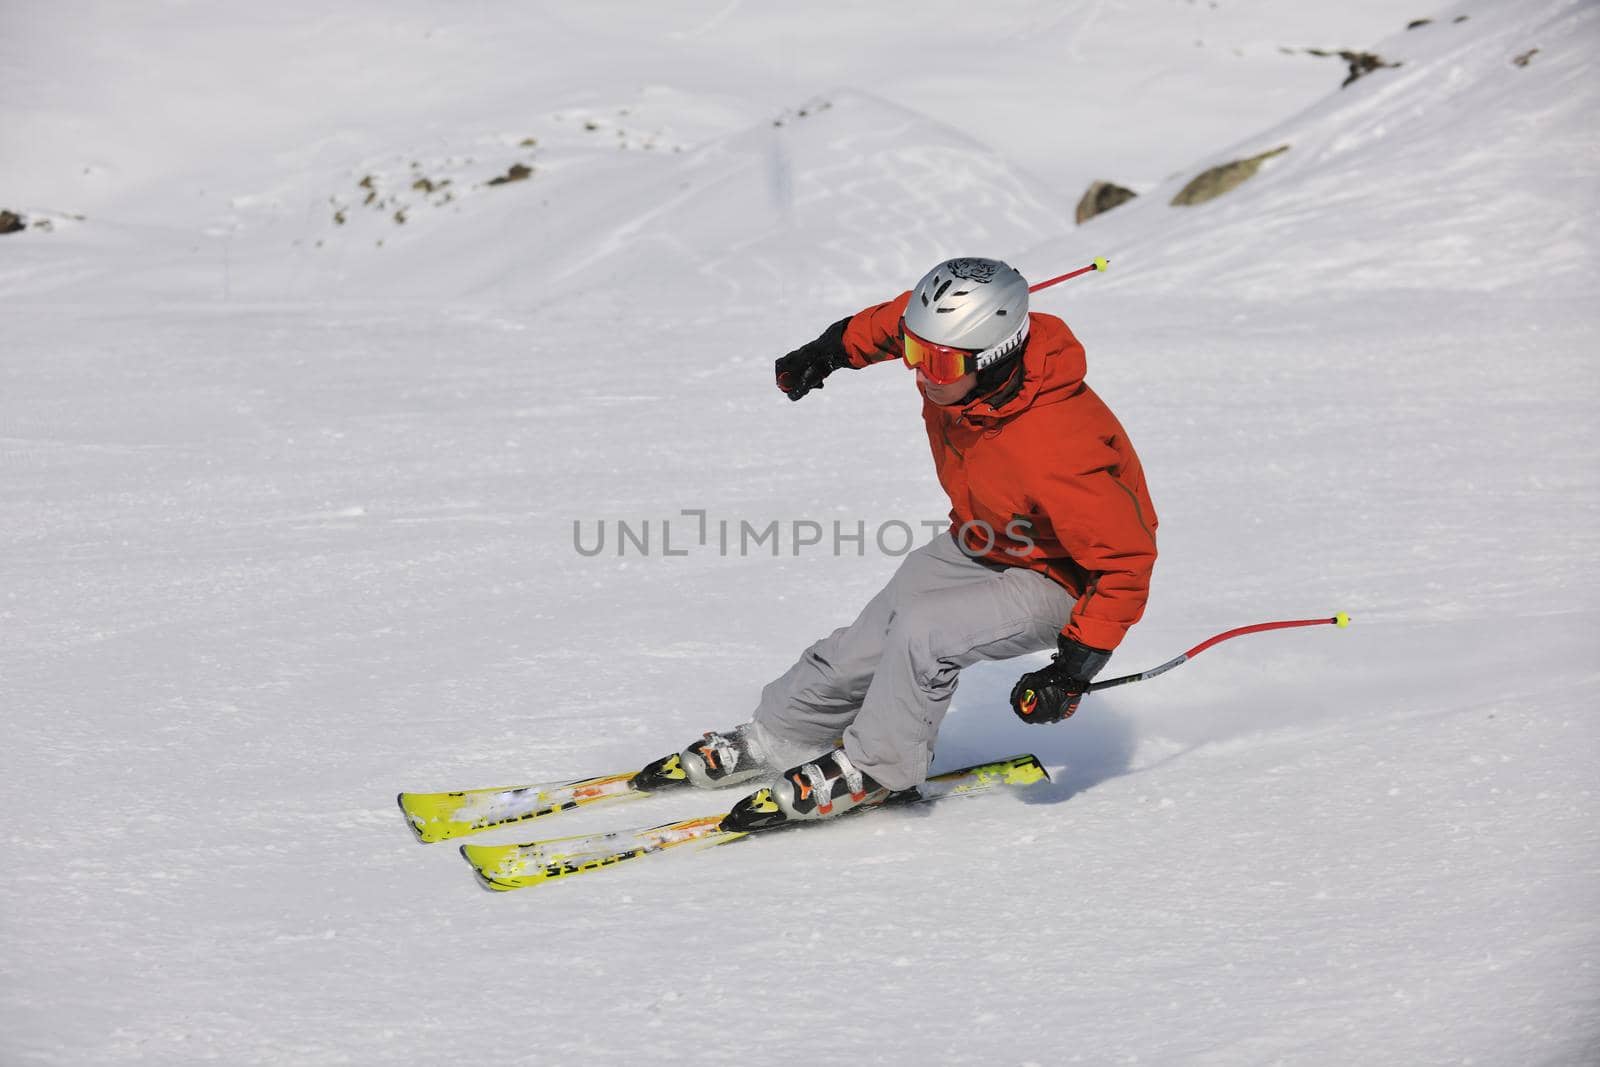  skiing at winter season by dotshock